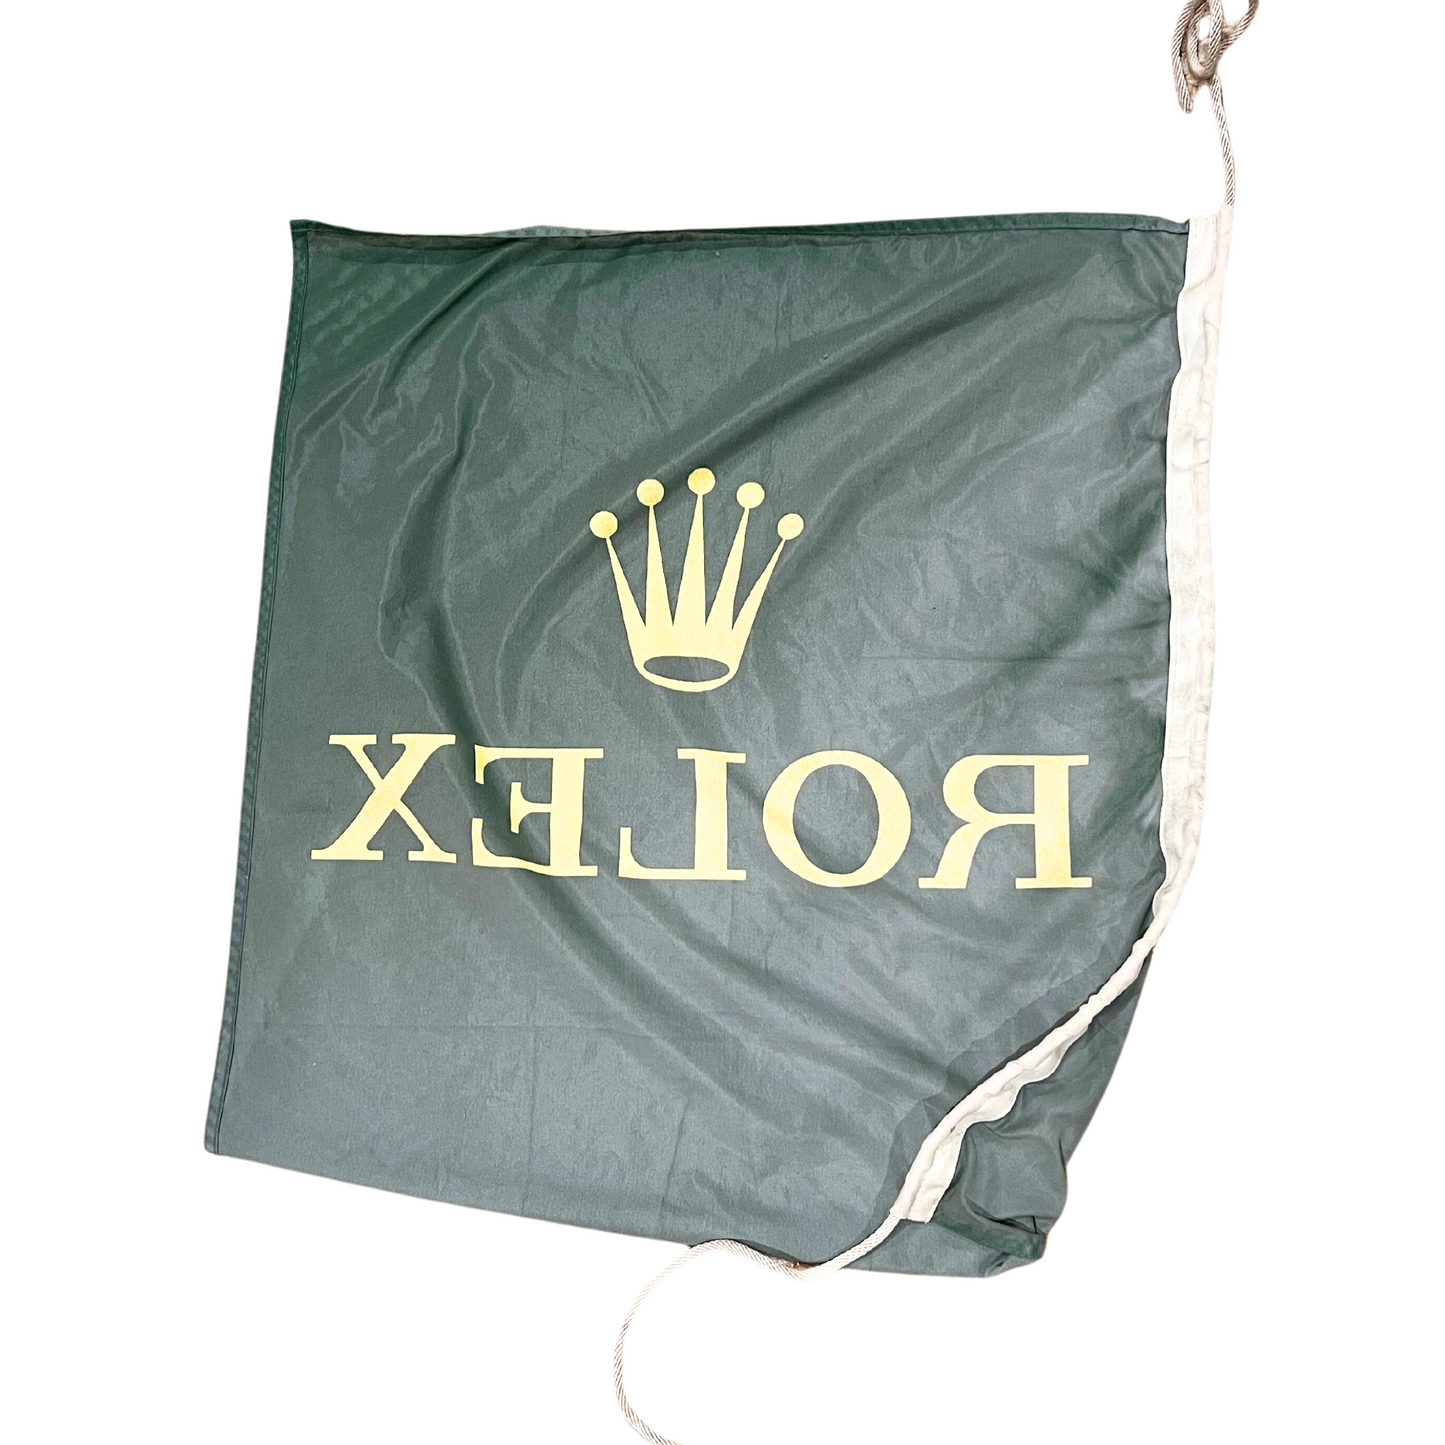 vintage Rolex sailing flag